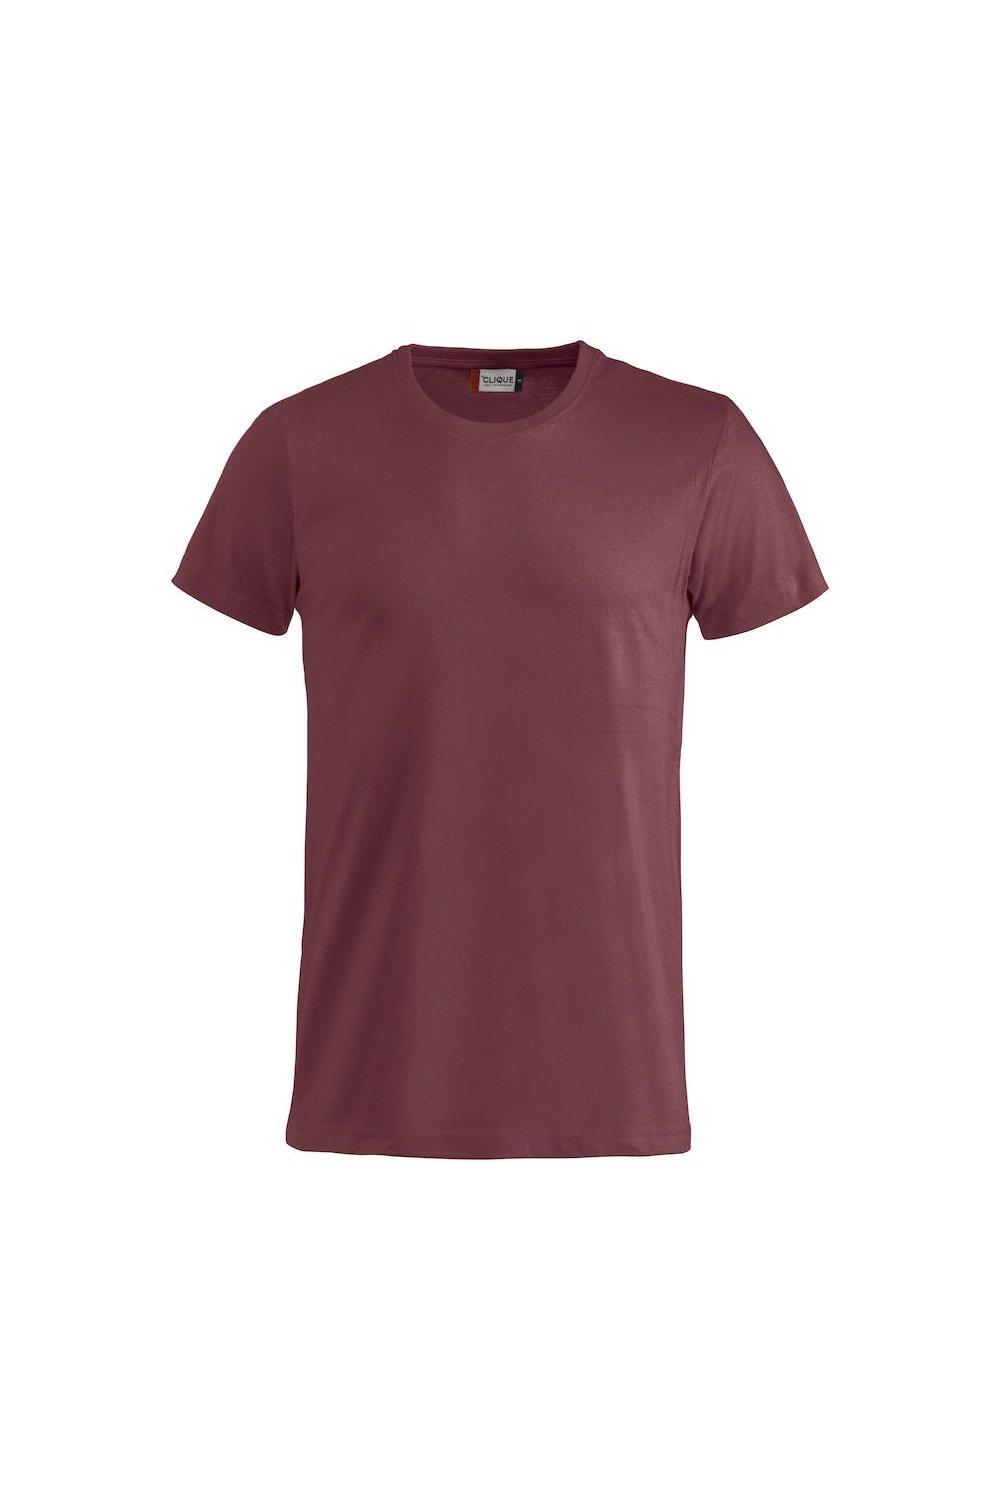 Базовая футболка Clique, красный футболка clique с надписью 42 размер